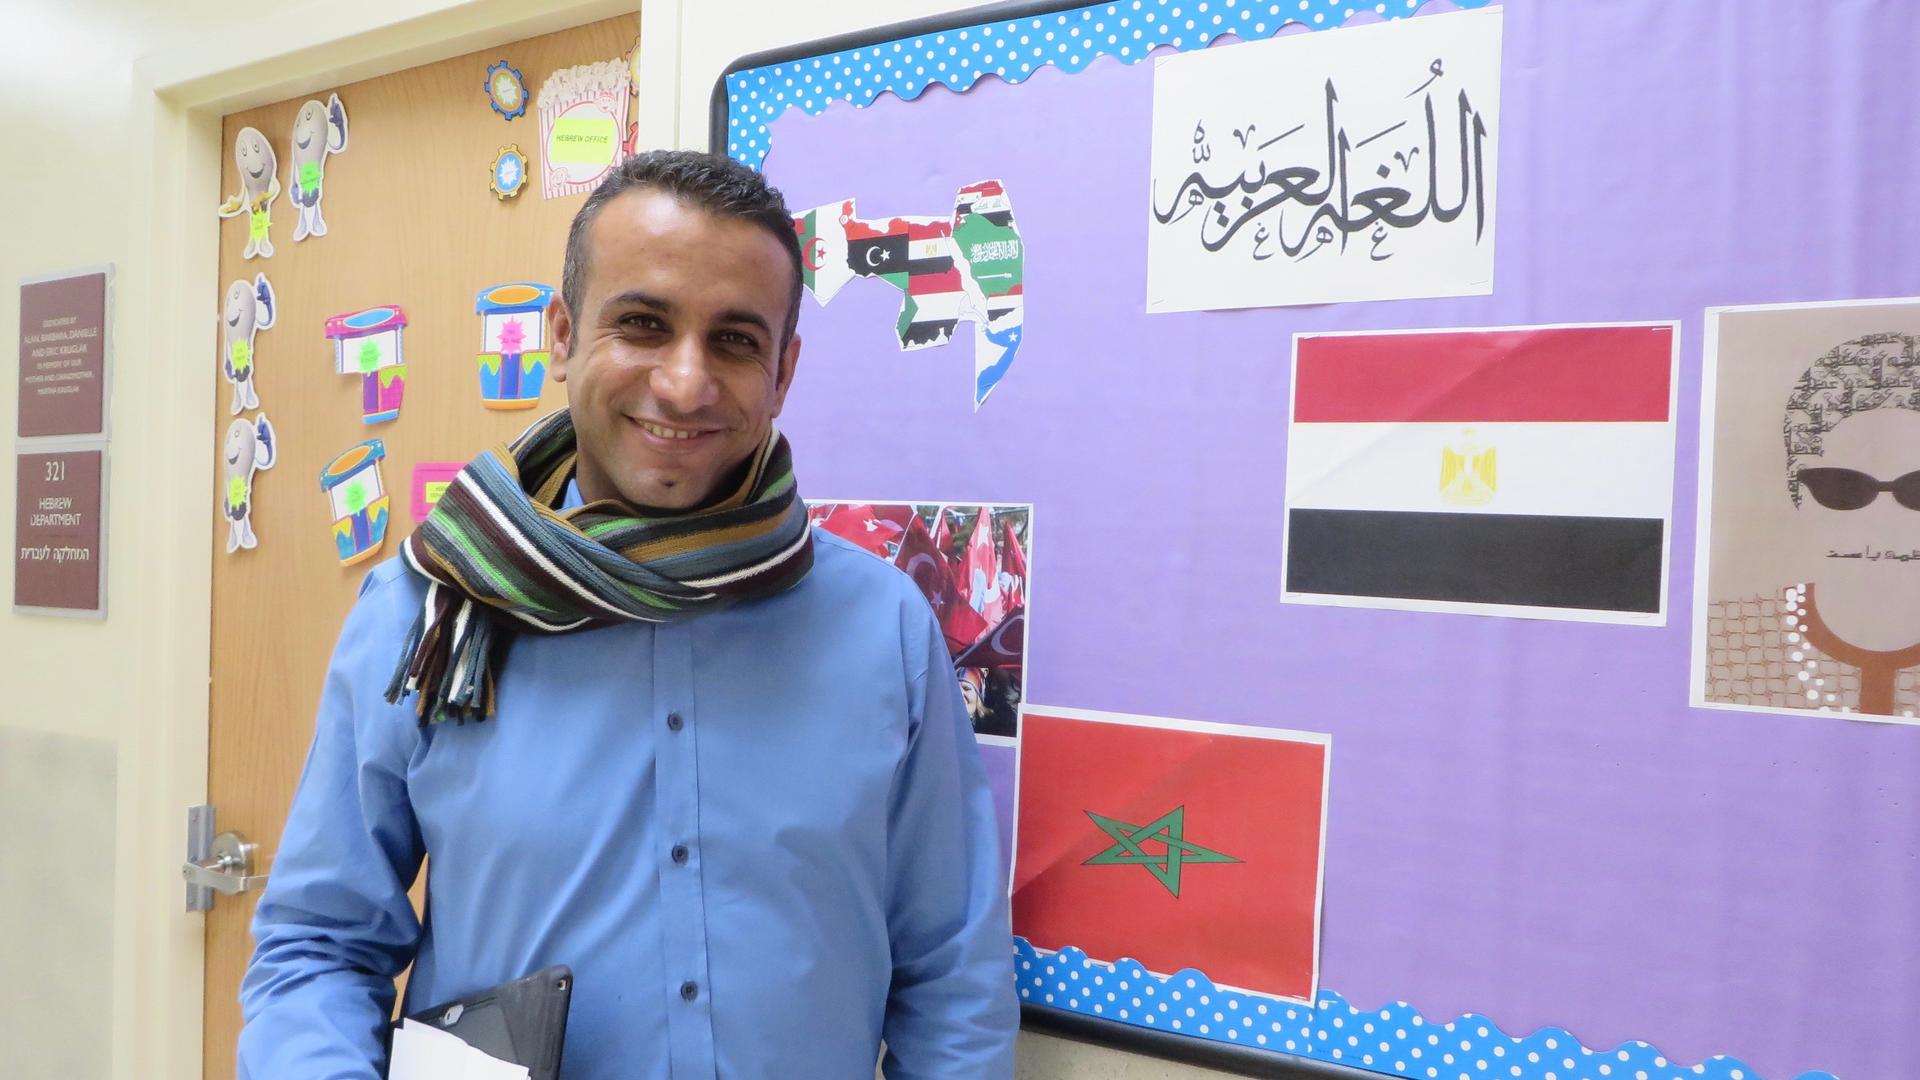 Hani Abo Awad teaches Arabic at the Charles E. Smith Jewish Day School of Greater Washington. He is an Arab-Israeli.